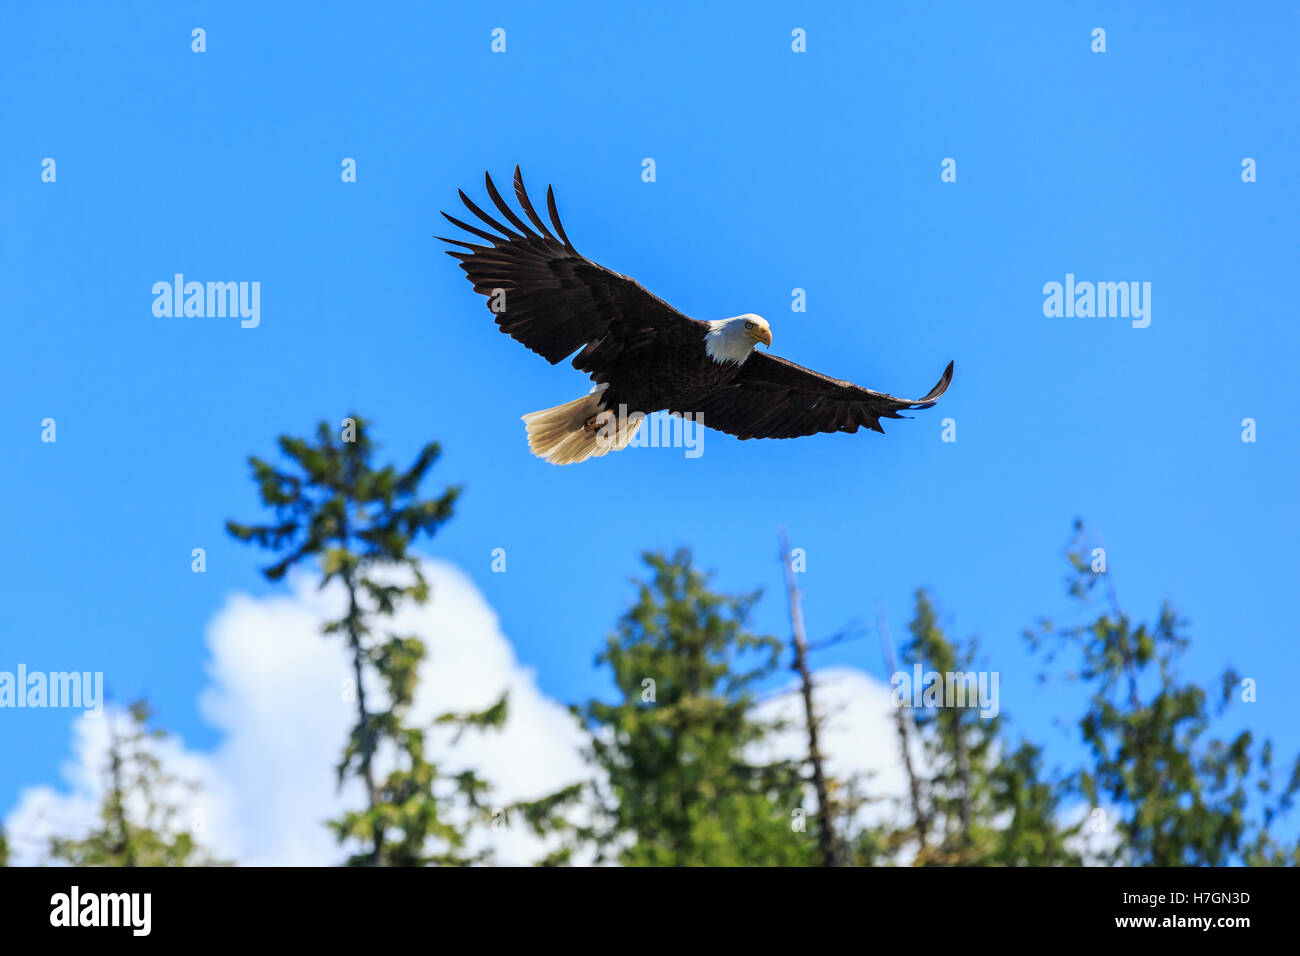 Bald eagle in flight, Alaska. United States of America. Stock Photo